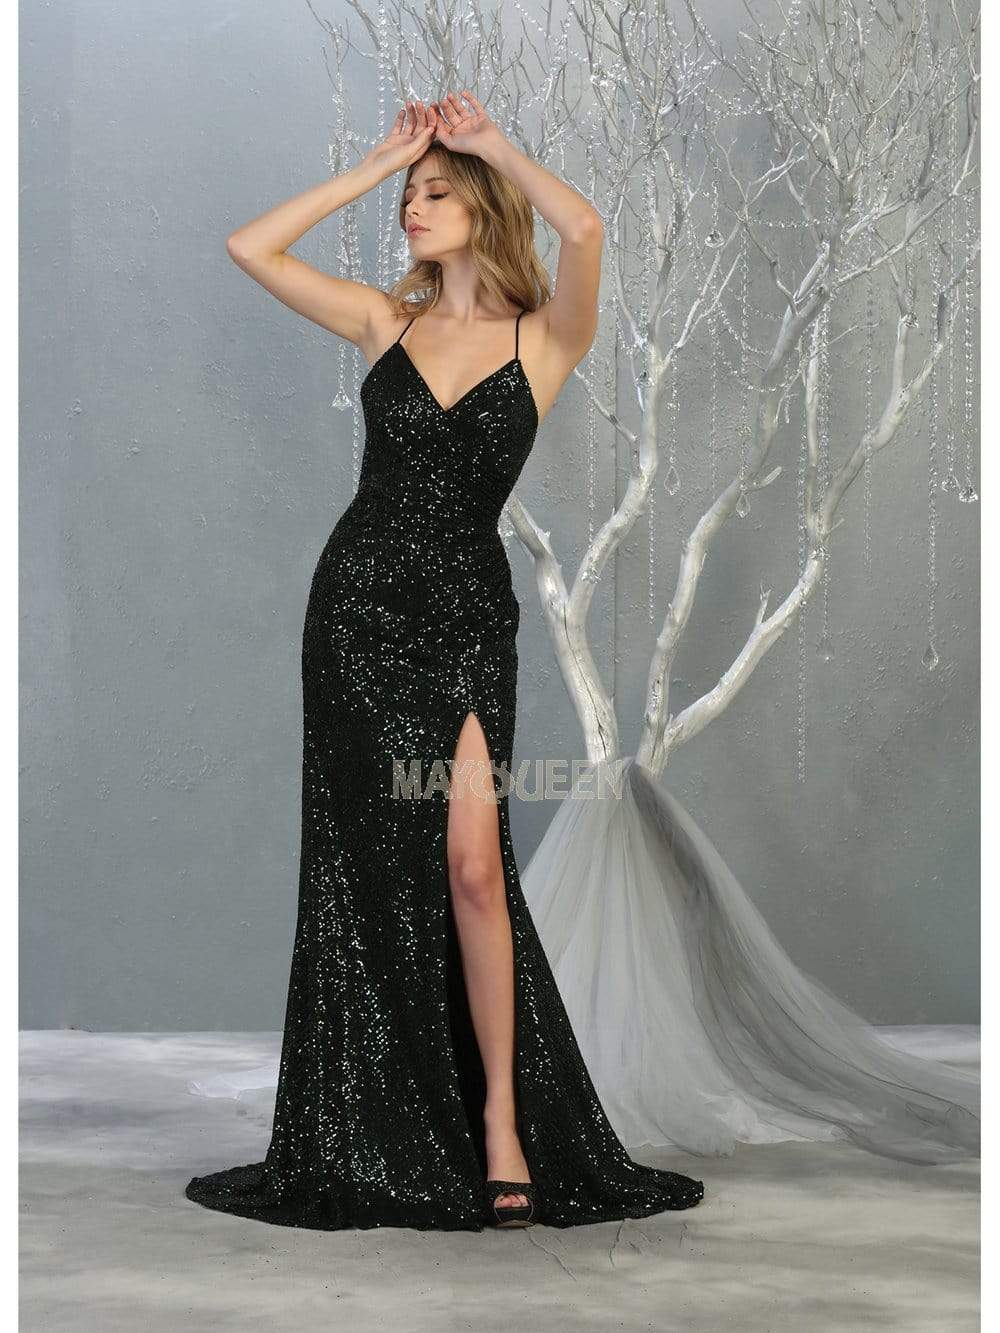 May Queen - RQ7852 Sequin Embellished Deep V-Neck Dress with Slit Evening Dresses